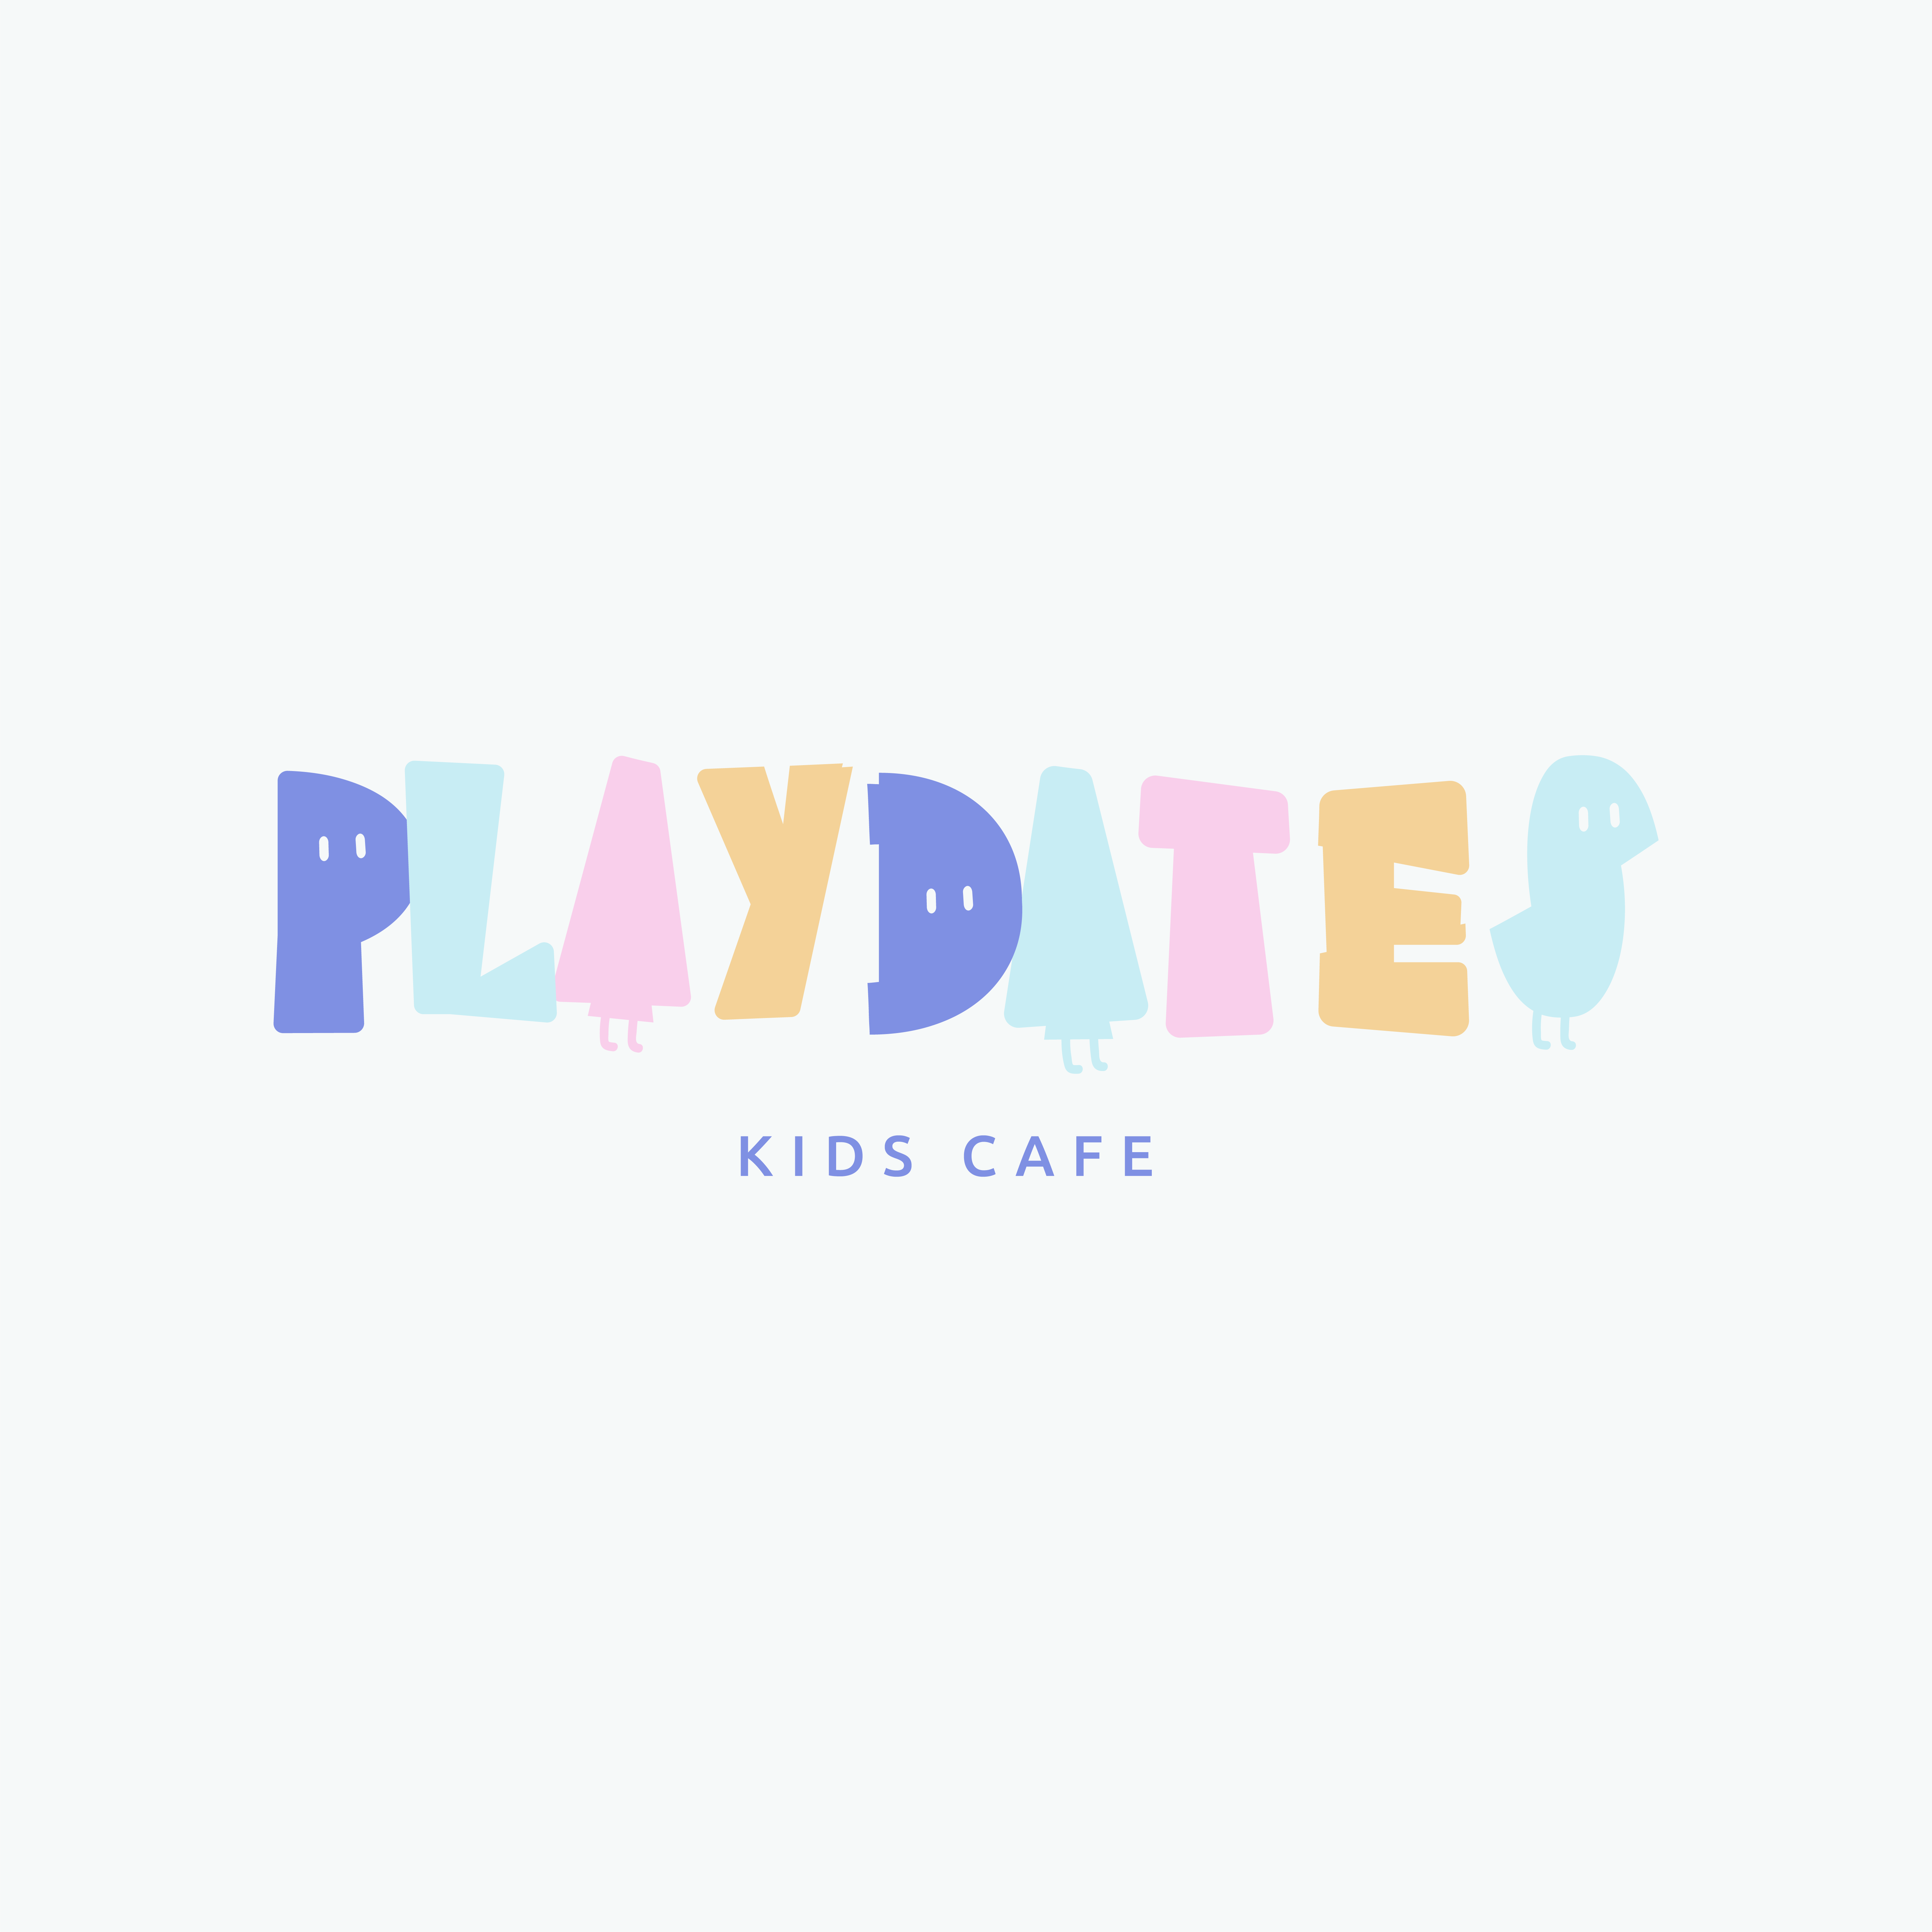 Playdates Kids Cafe